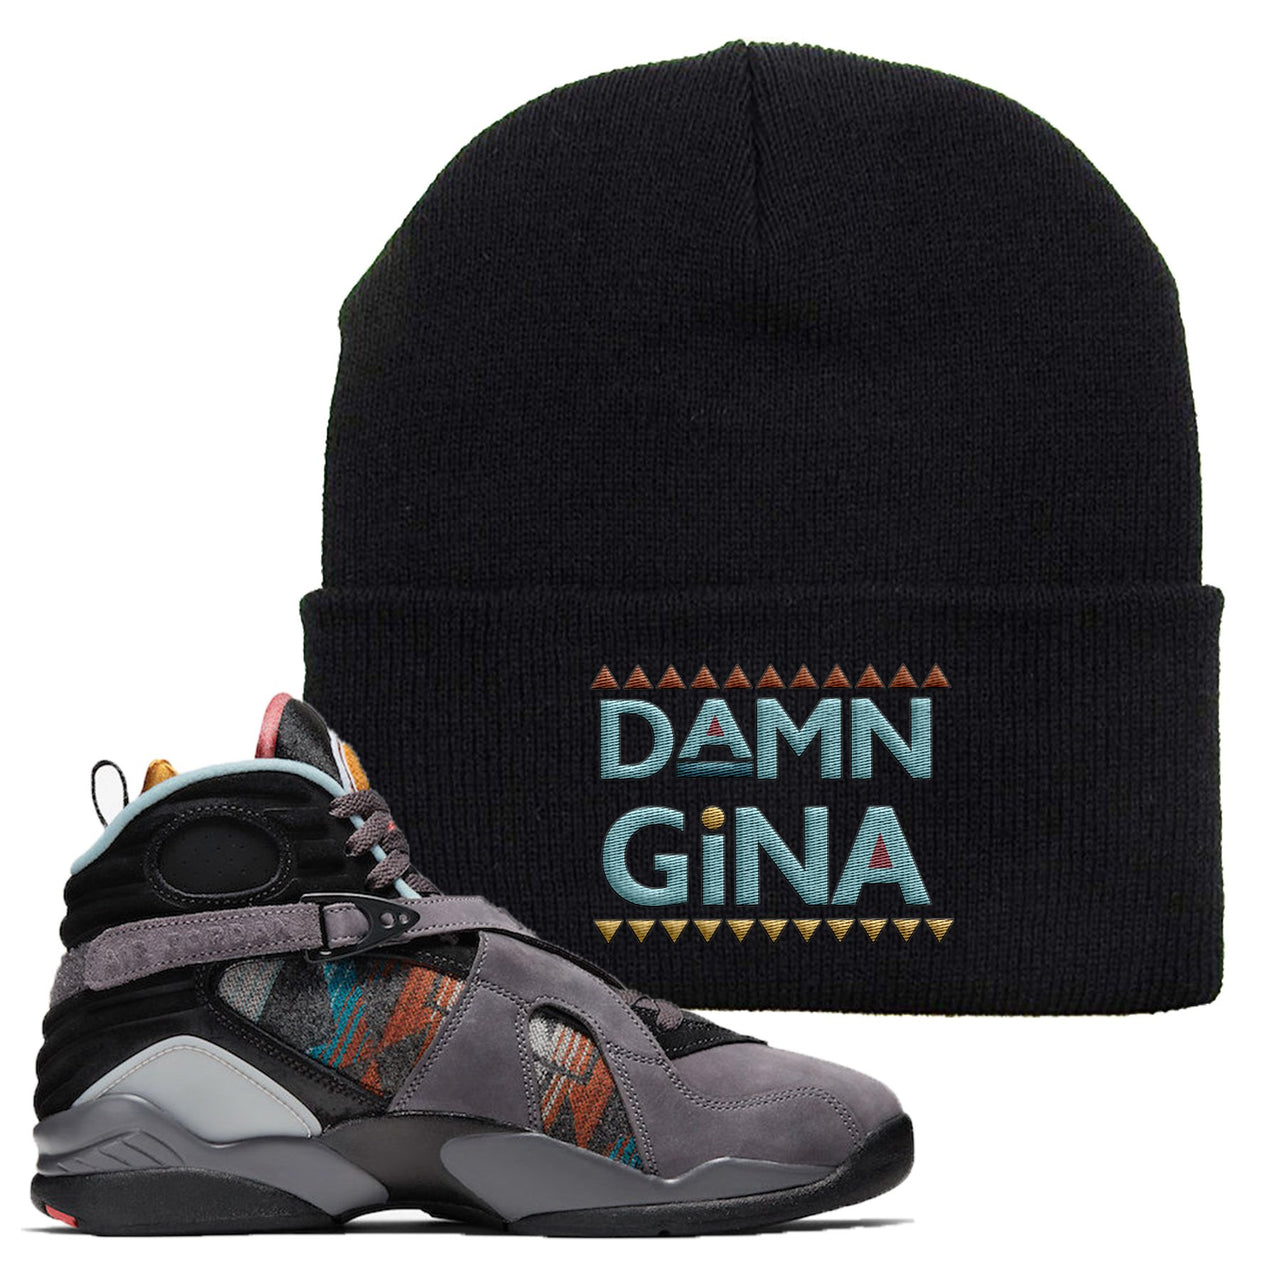 Jordan 8 N7 Pendleton Damn Gina Black Sneaker Hook Up Beanie